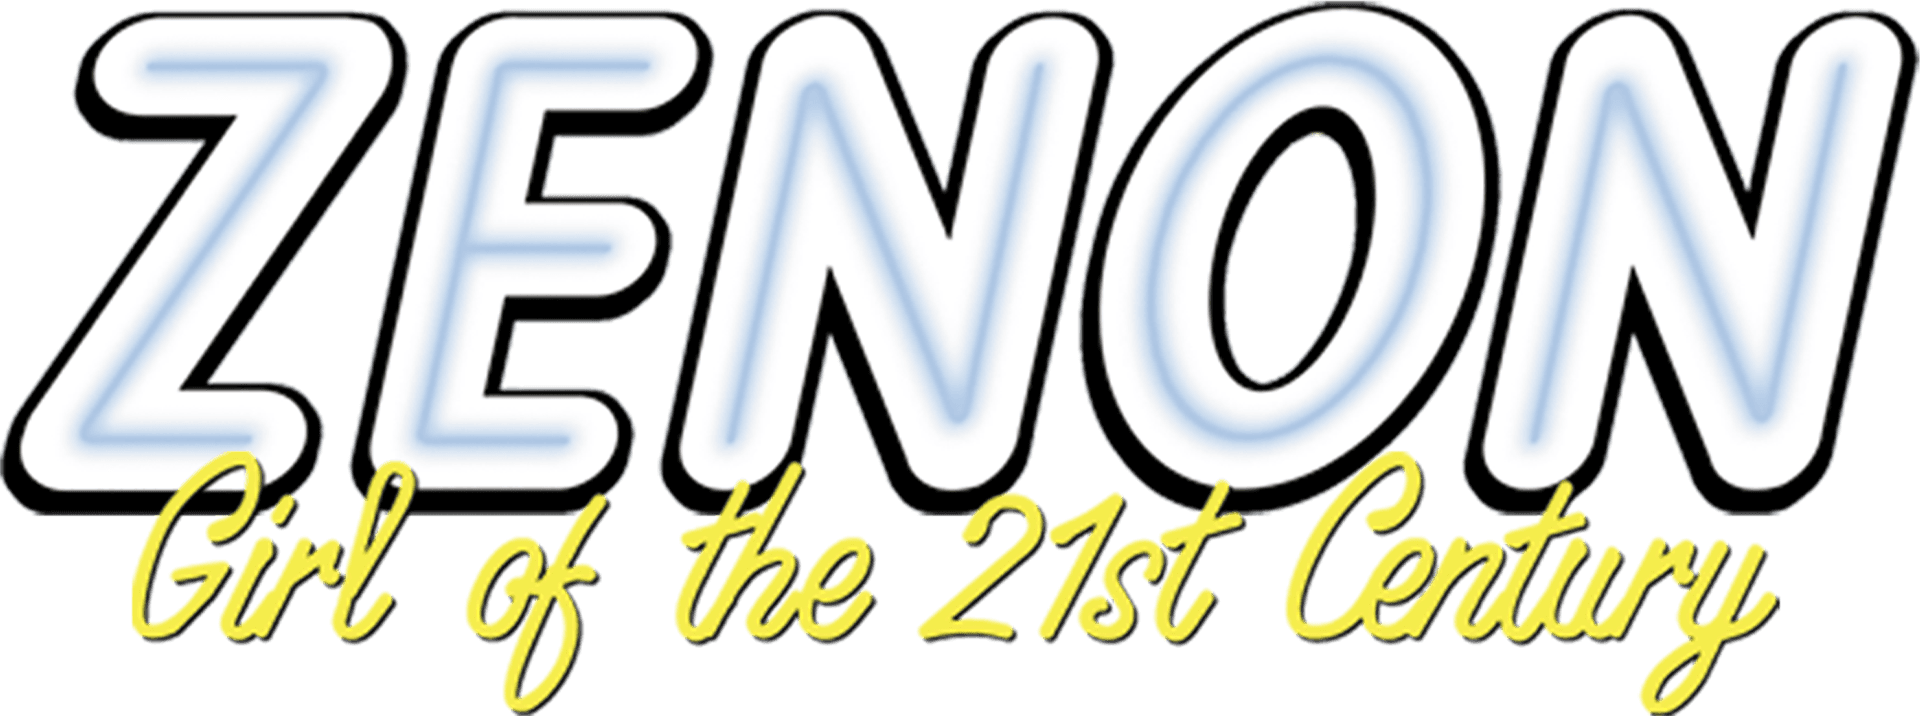 Zenon: Girl of the 21st Century logo